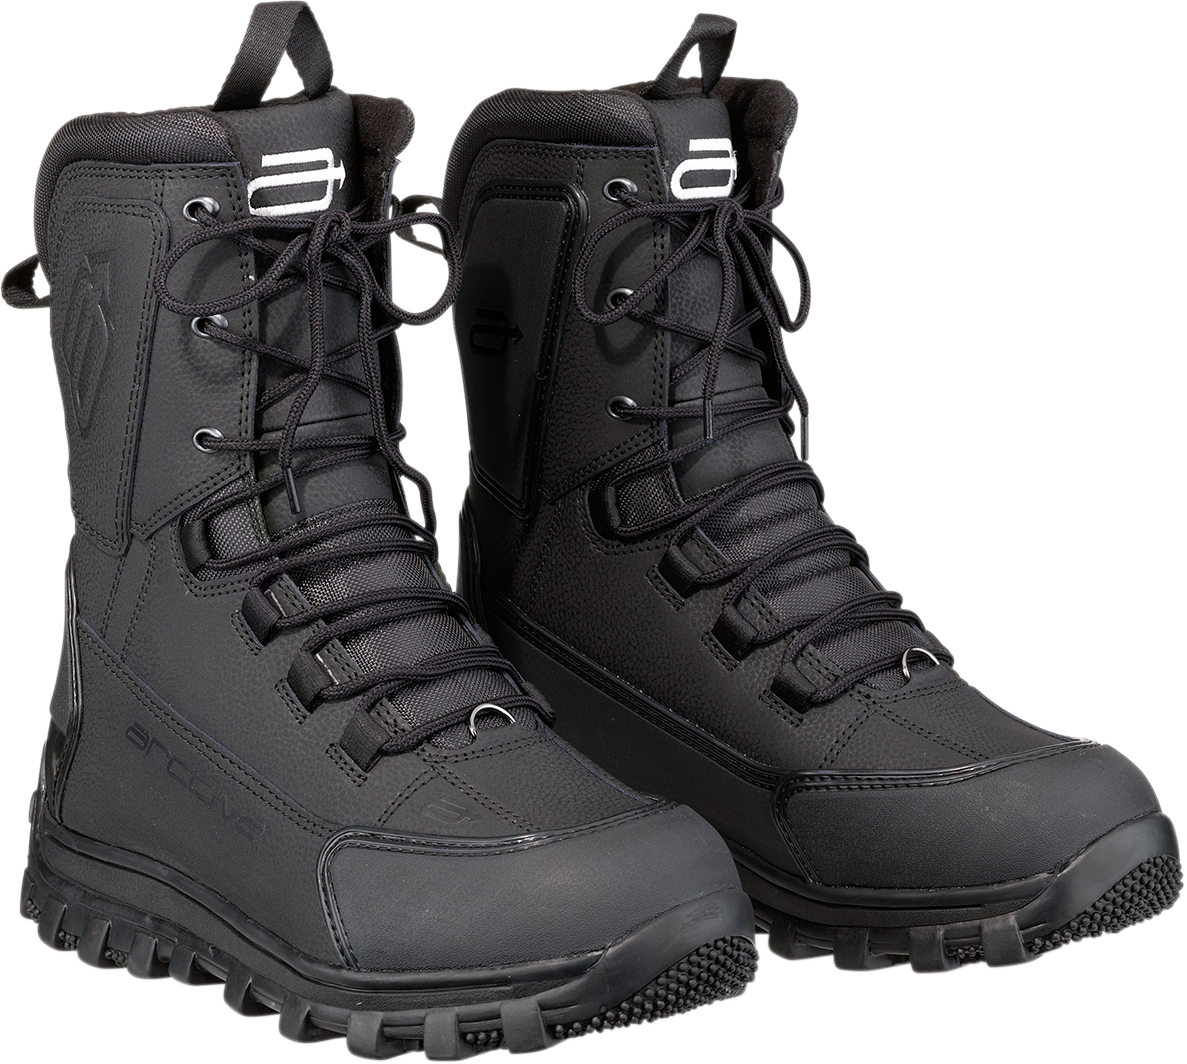 ARCTIVA Advance Boots - Black - Size 13 3420-0646